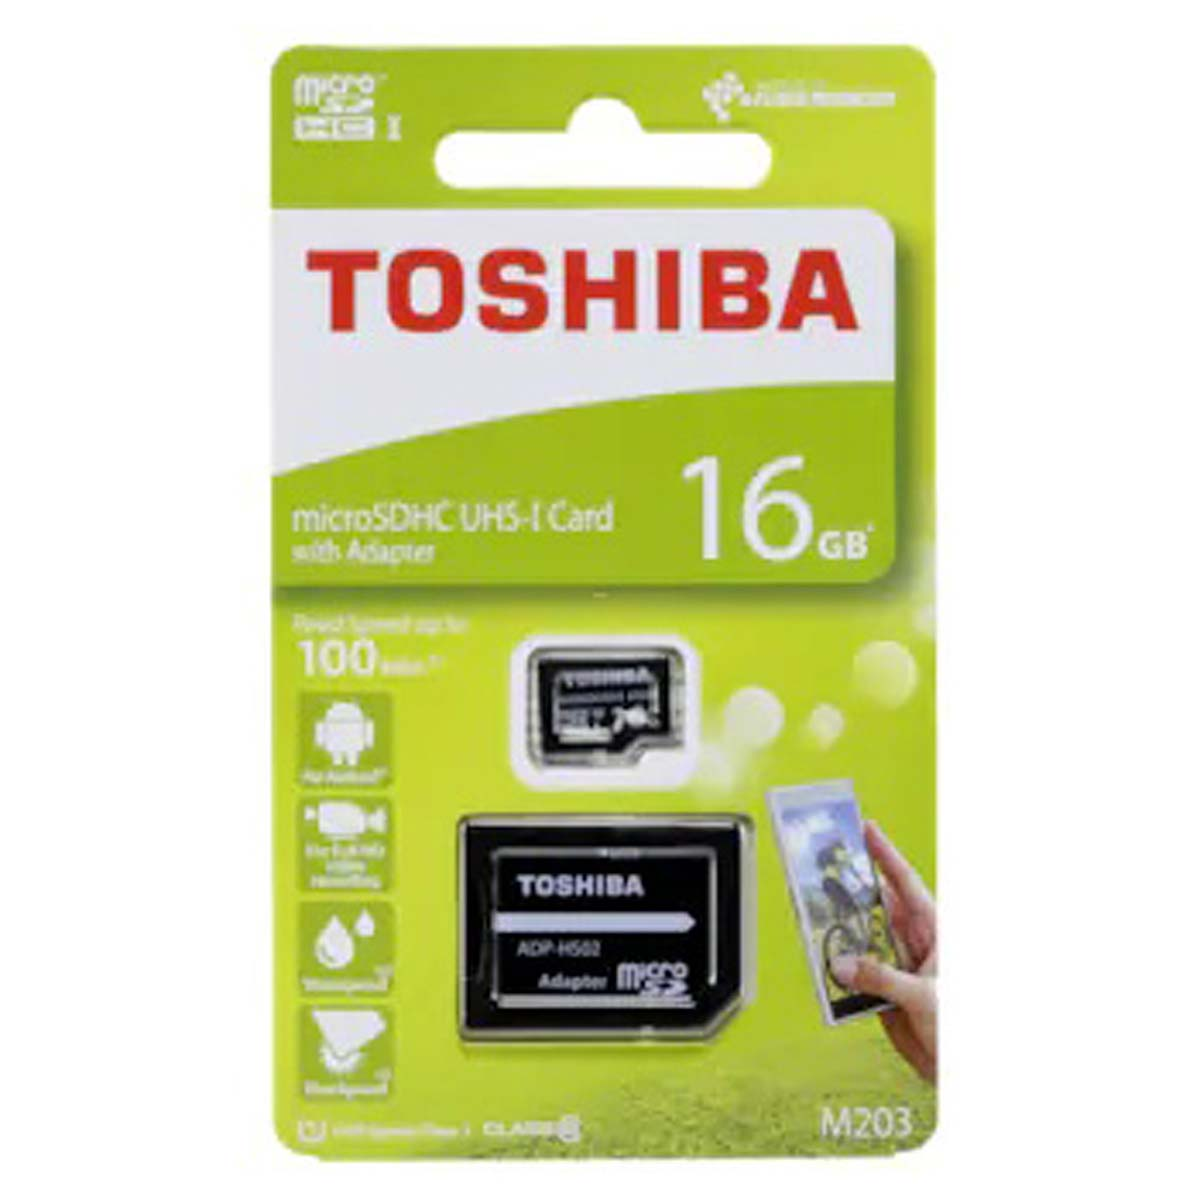 TOSHIBA 41094, Micro-SDHC Speicherkarte, Mbit/s 100 16 GB